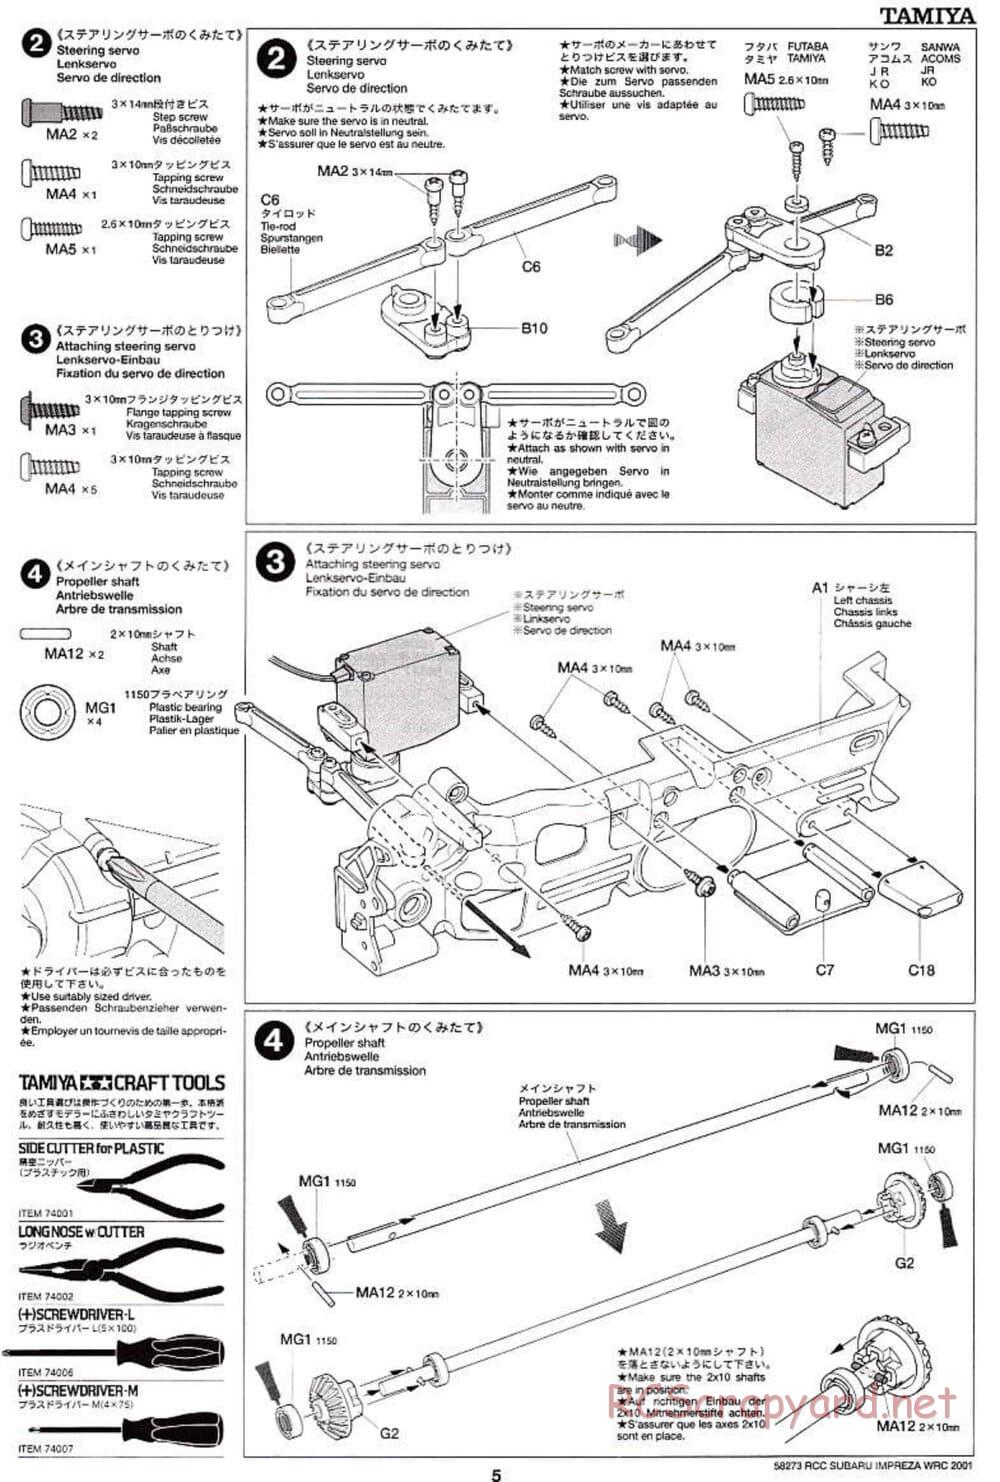 Tamiya - Subaru Impreza WRC 2001 - TL-01 Chassis - Manual - Page 5